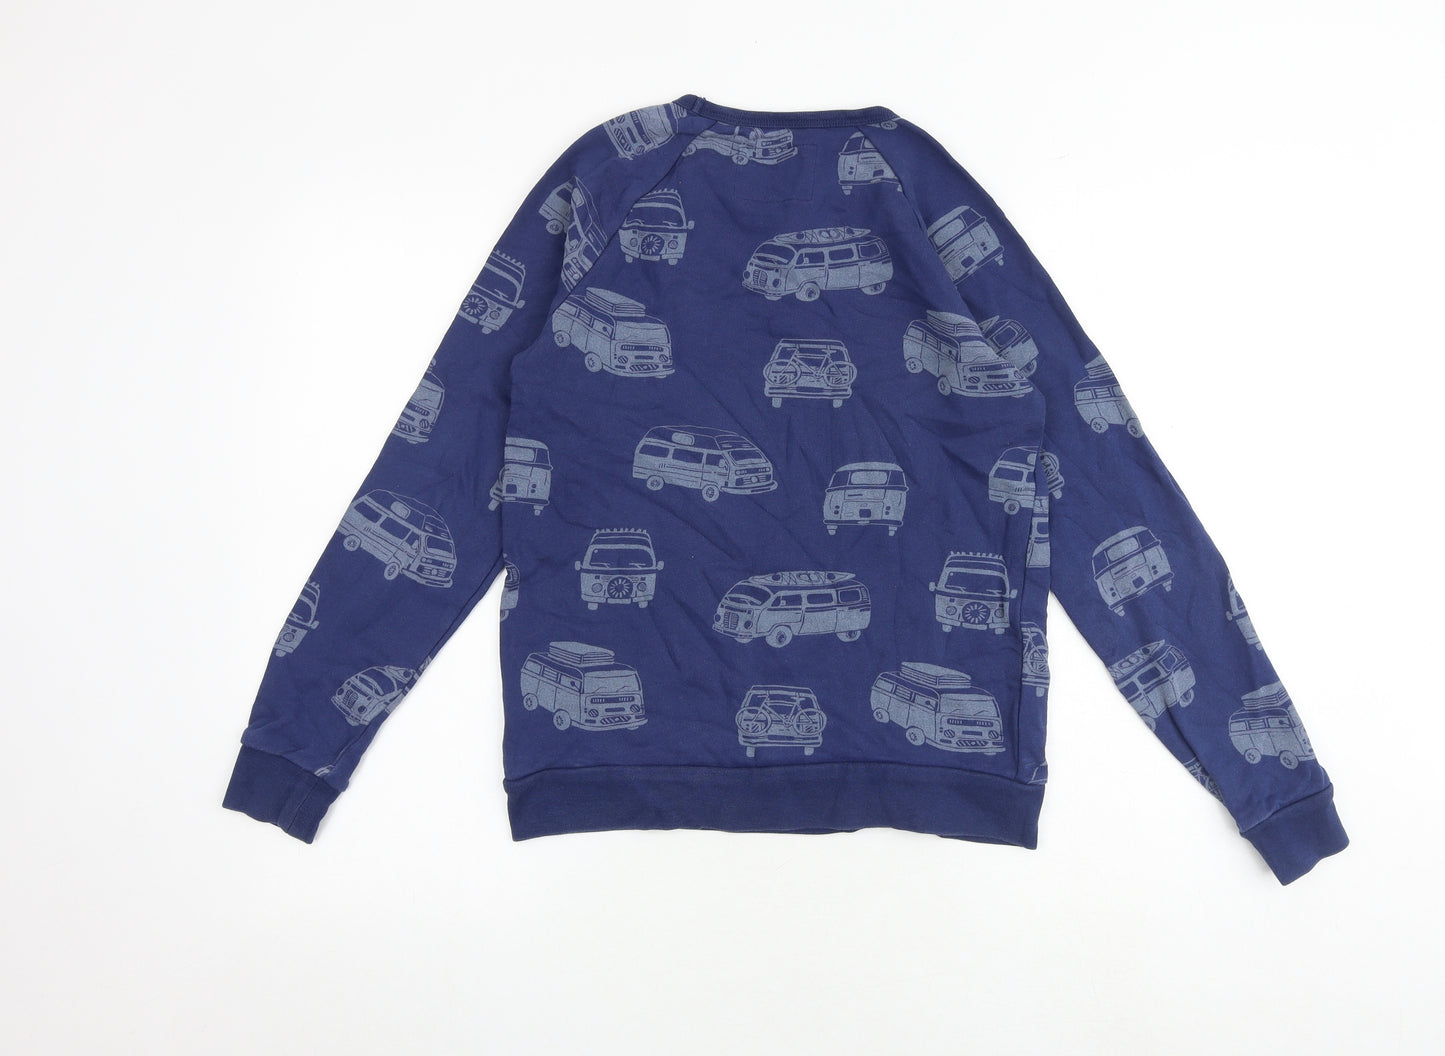 Mini Boden Boys Blue Geometric 100% Cotton Pullover Sweatshirt Size 11-12 Years Pullover - Campervan Print